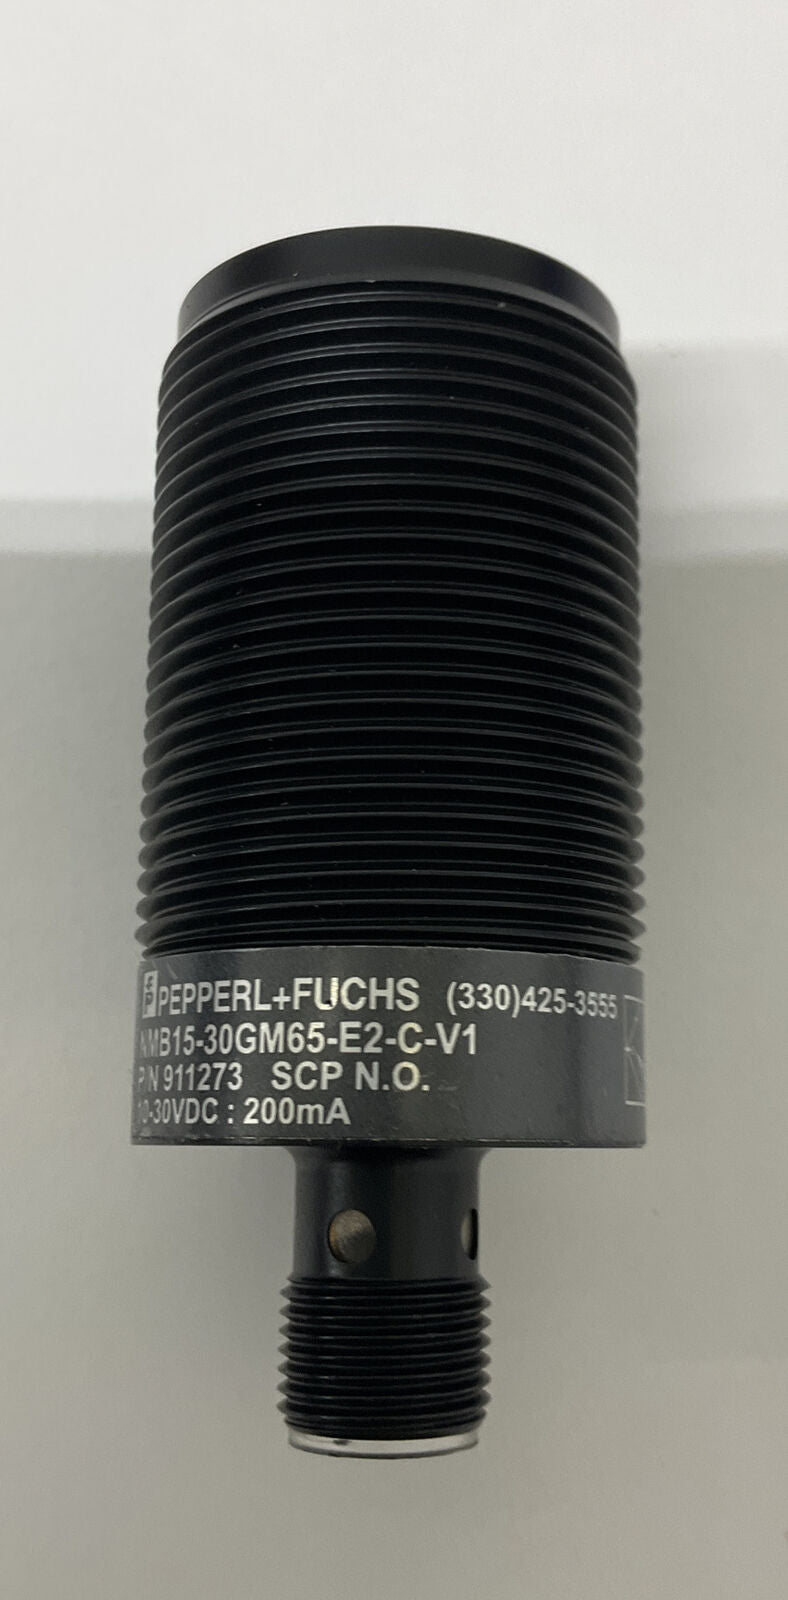 Pepperl - Fuchs NMB15-30GM65-E2-C-V1 / 911273 Proximity Sensor (GR108) - 0